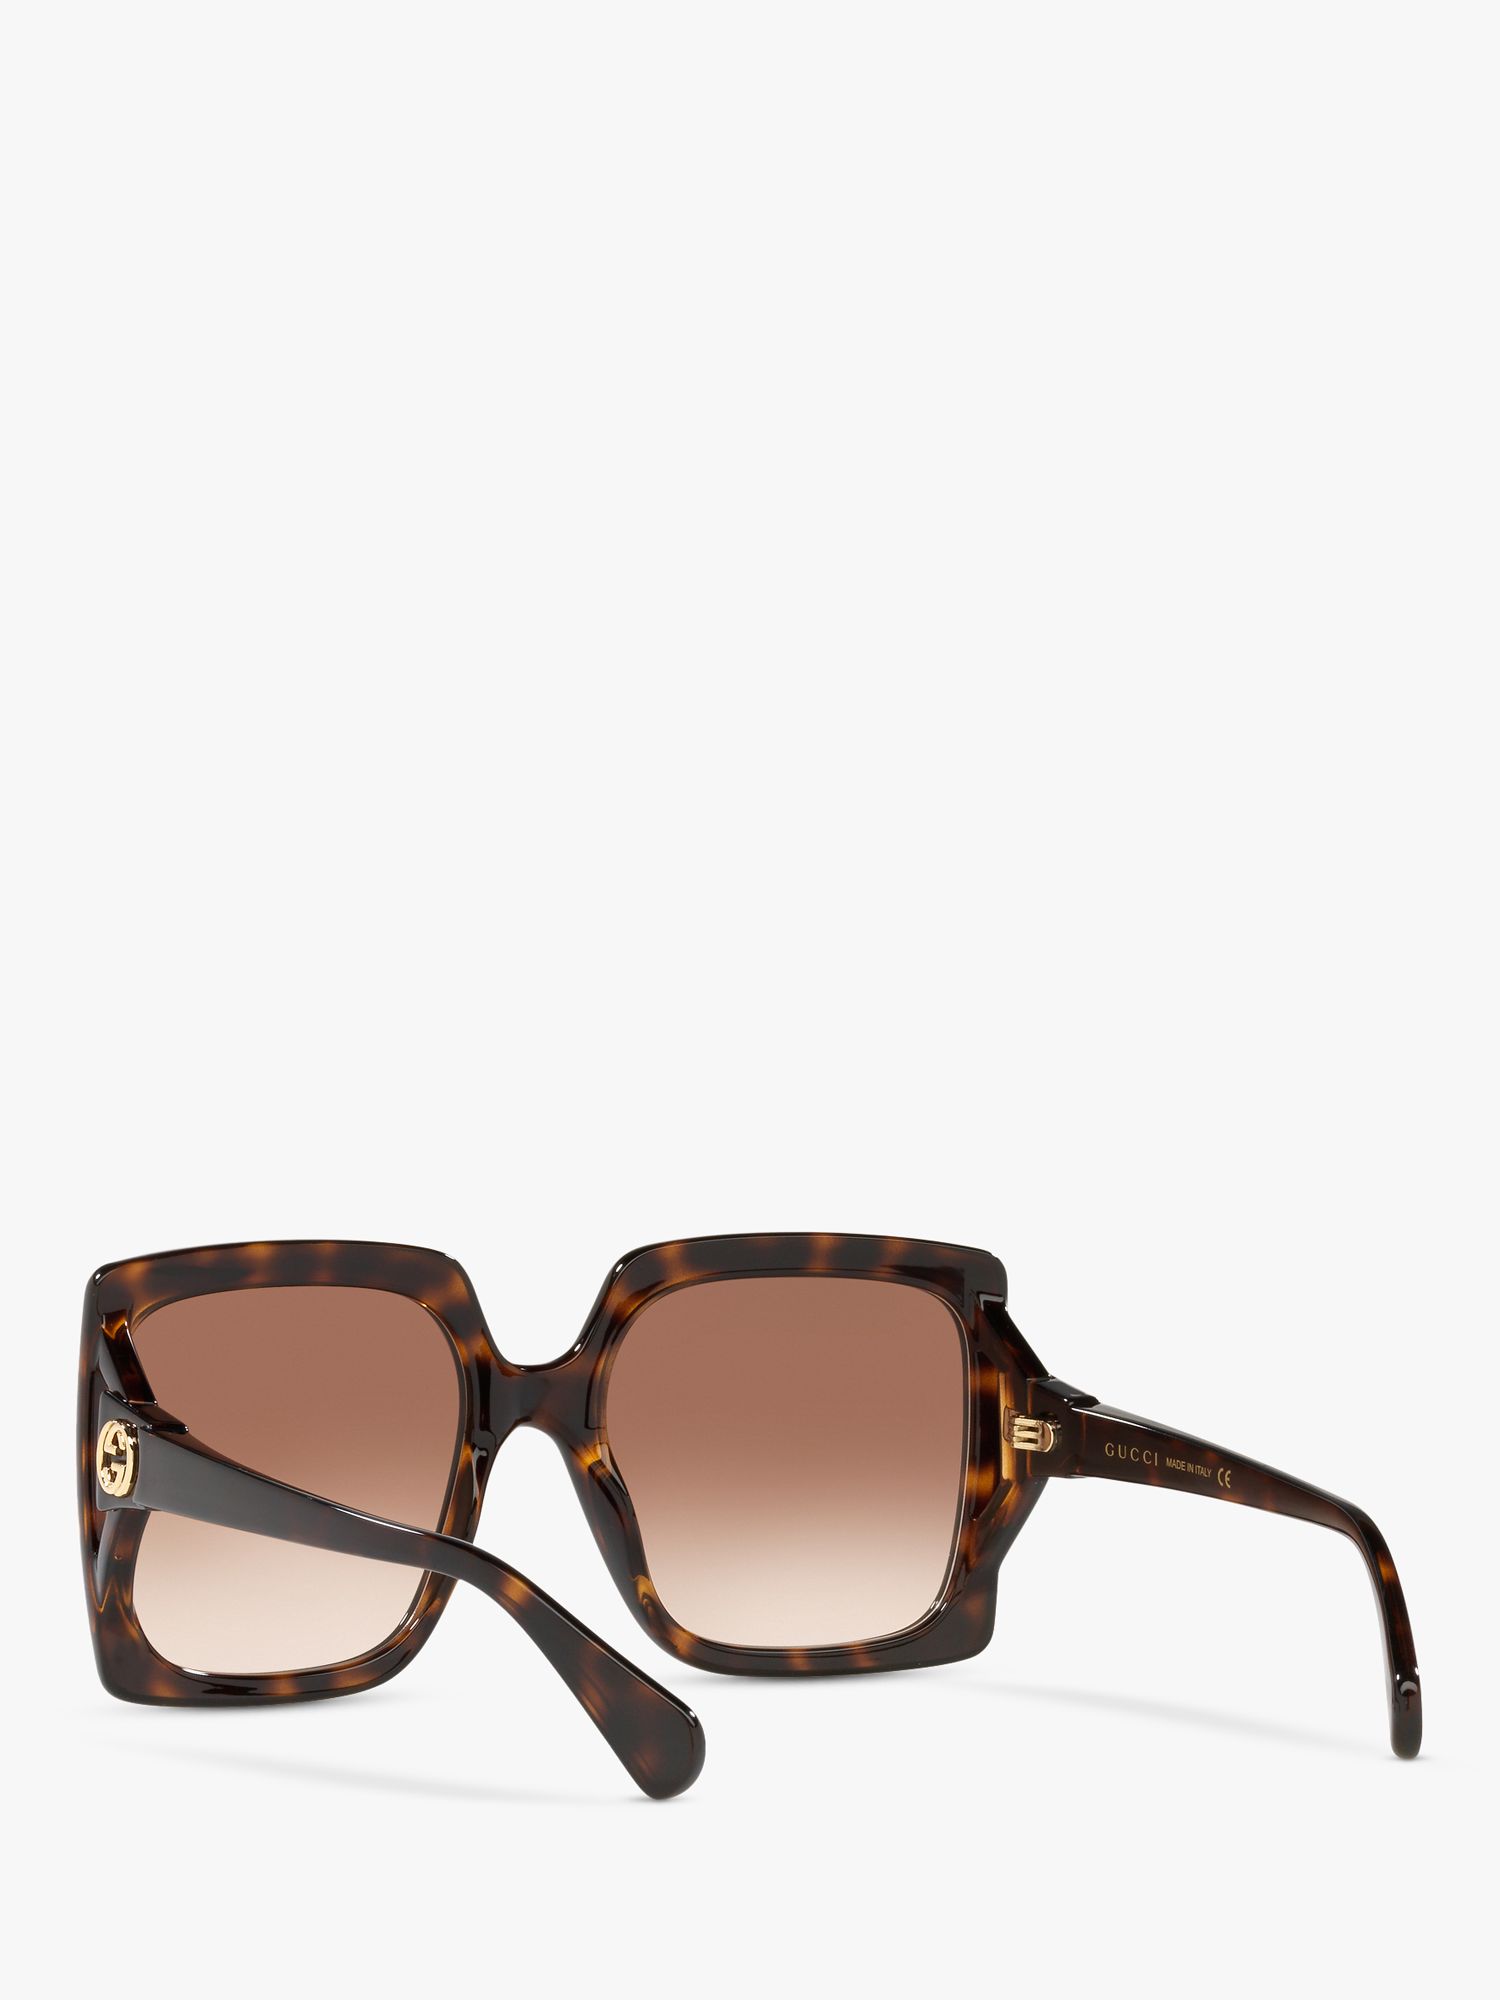 Gucci GG0876S Women's Chunky Square Sunglasses, Tortoise/Brown Gradient ...